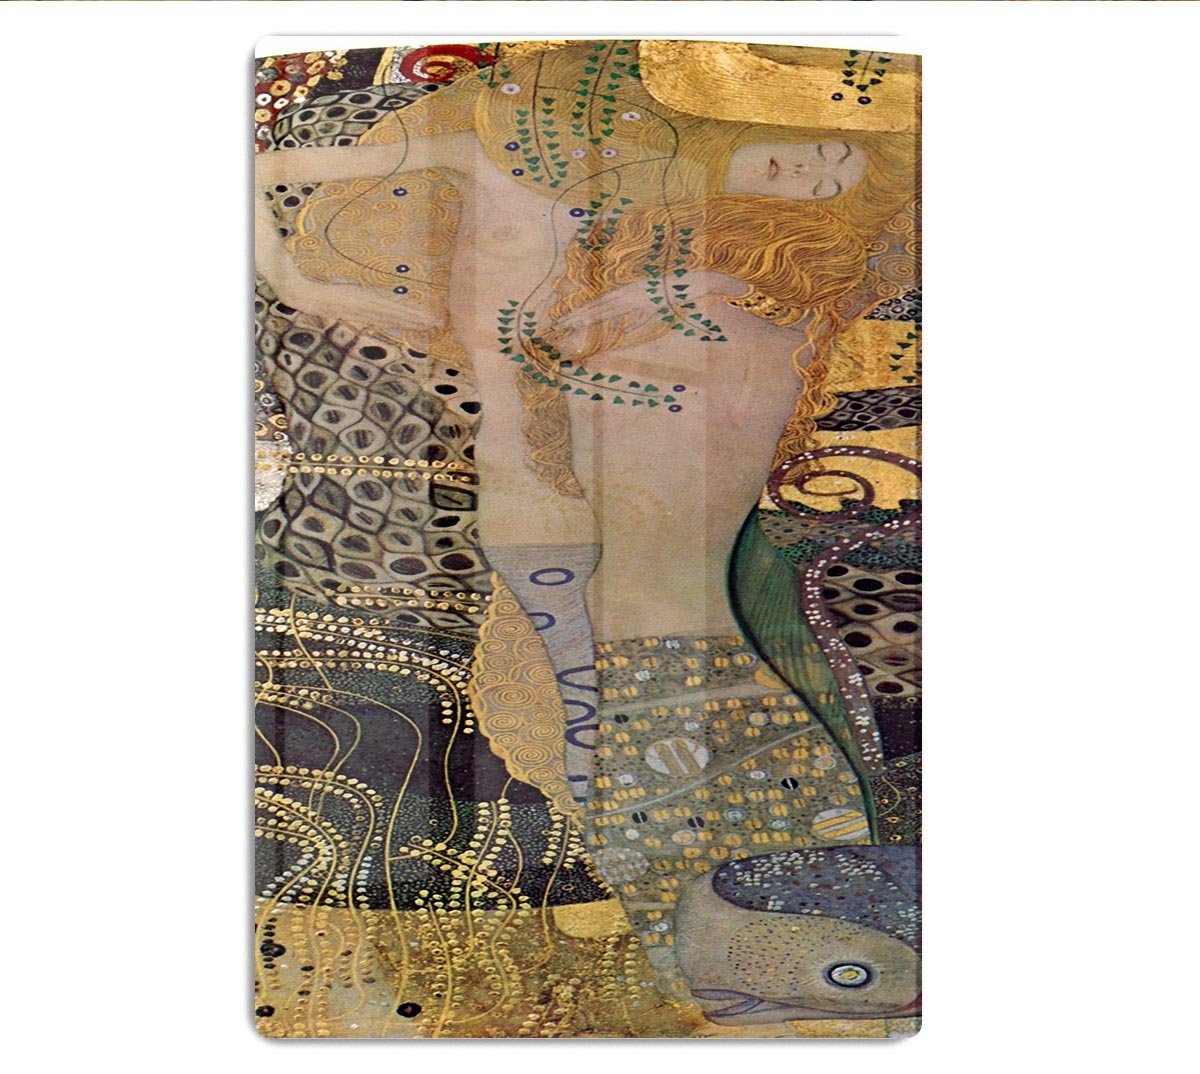 Water snakes friends I by Klimt HD Metal Print